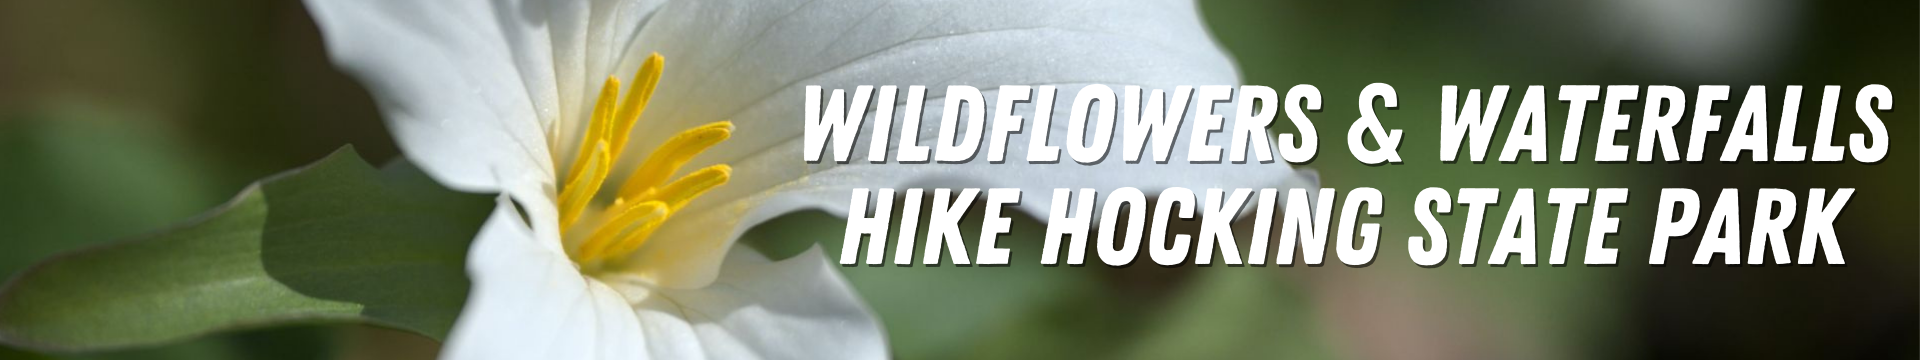 Wildflowers & Waterfalls Hike Hocking State Park